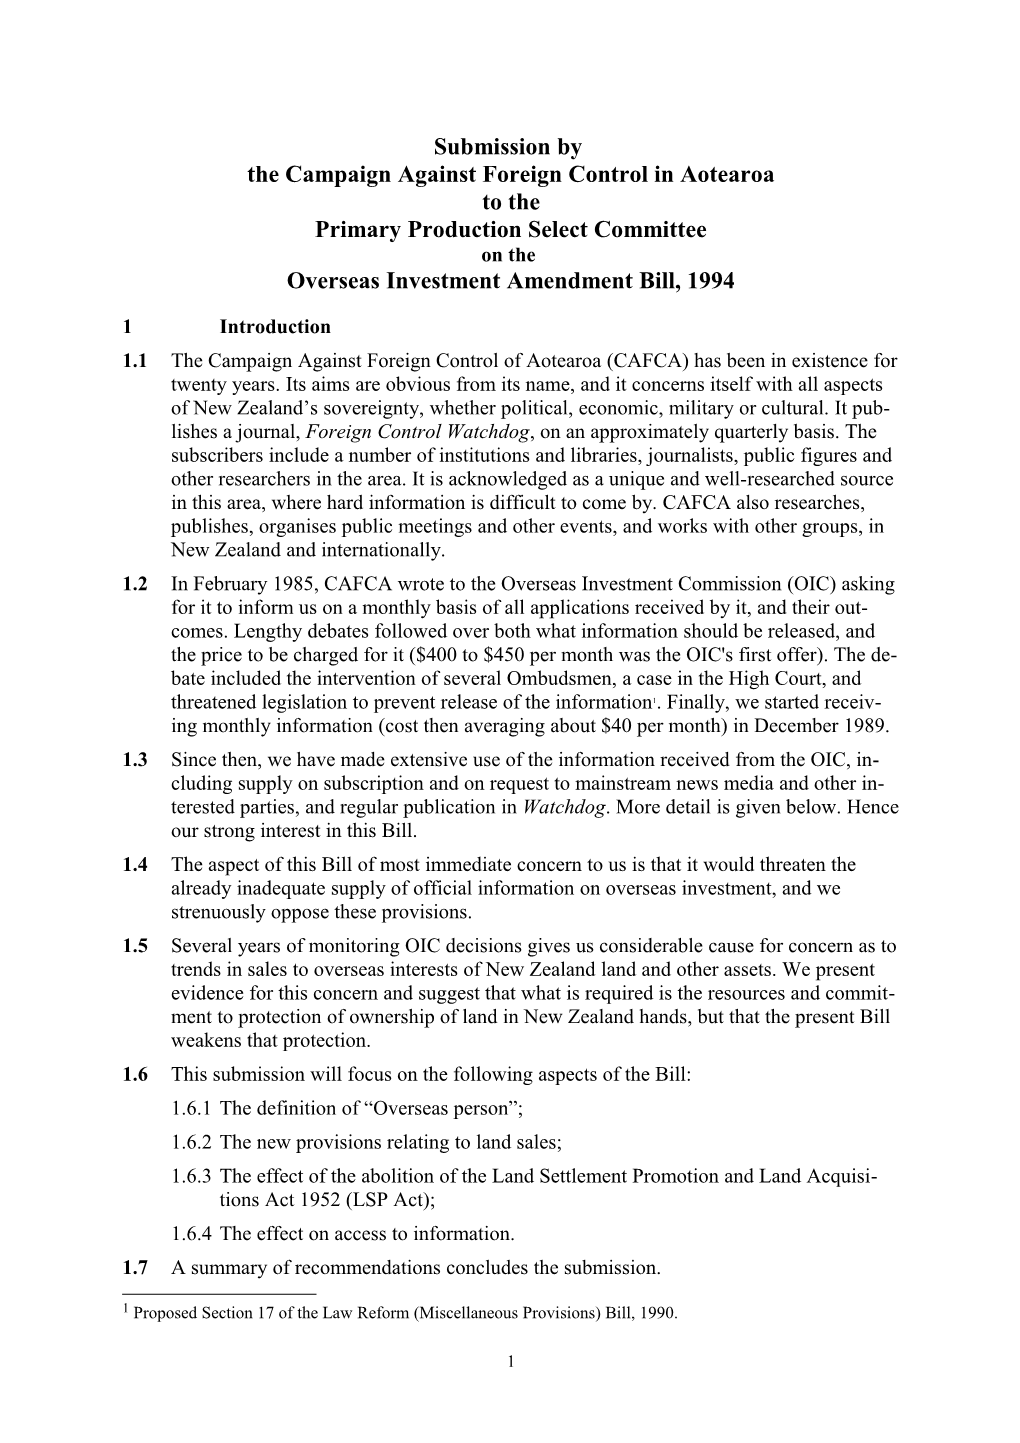 Overseas Investment Amendment Bill, 1994